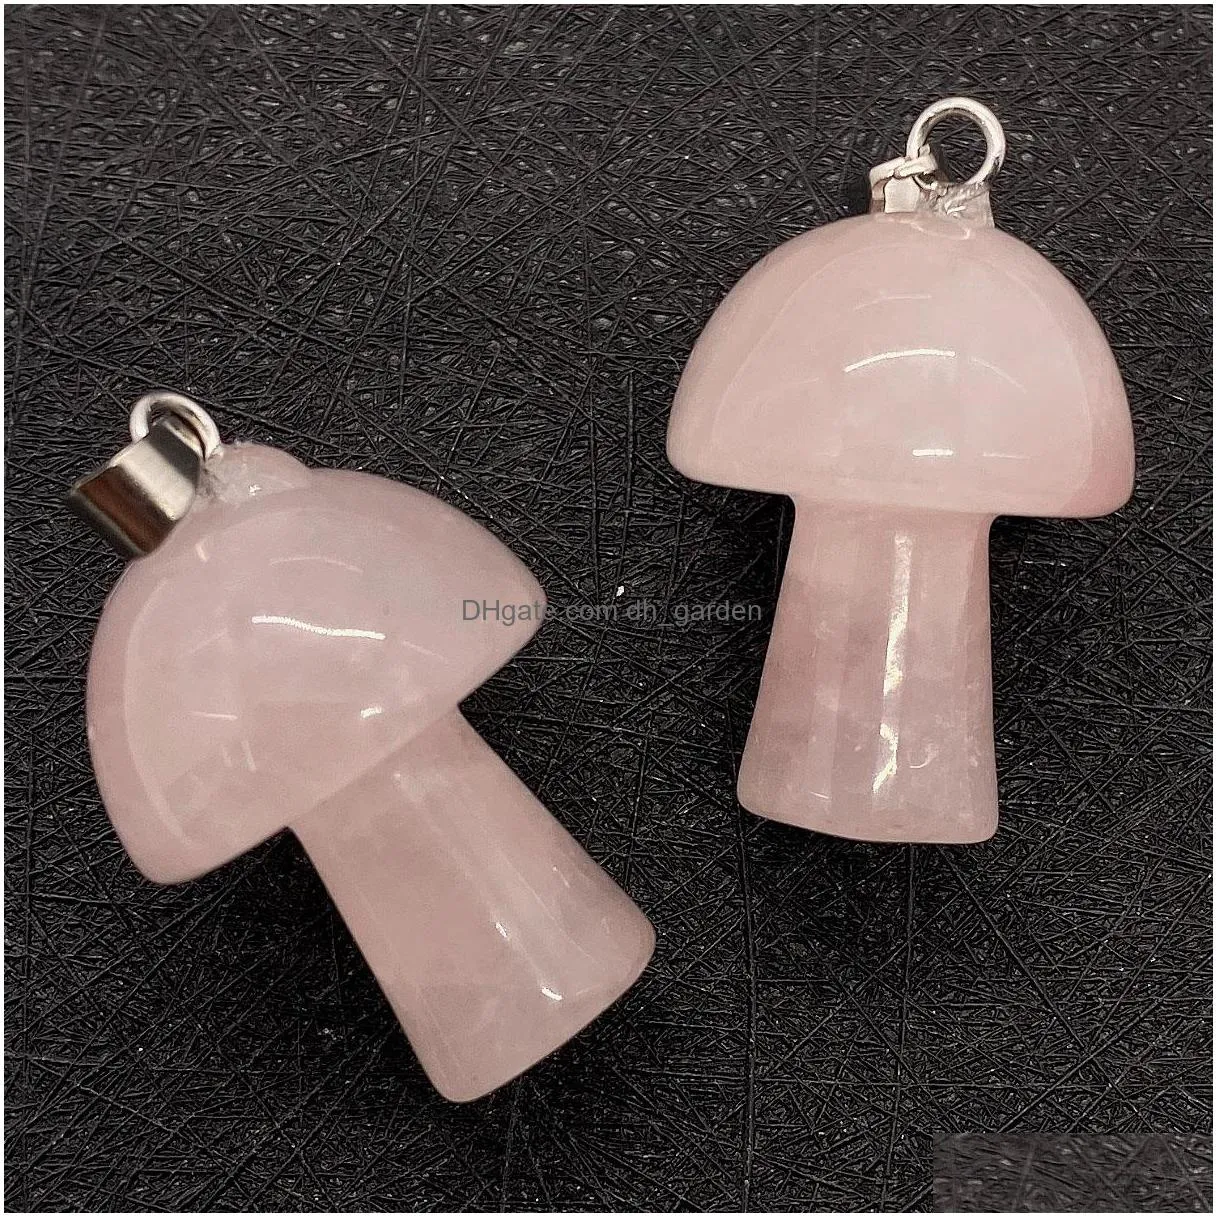 mini mushroom statue natural stone carving pendant reiki healing gem necklace for women jewelry wholesale